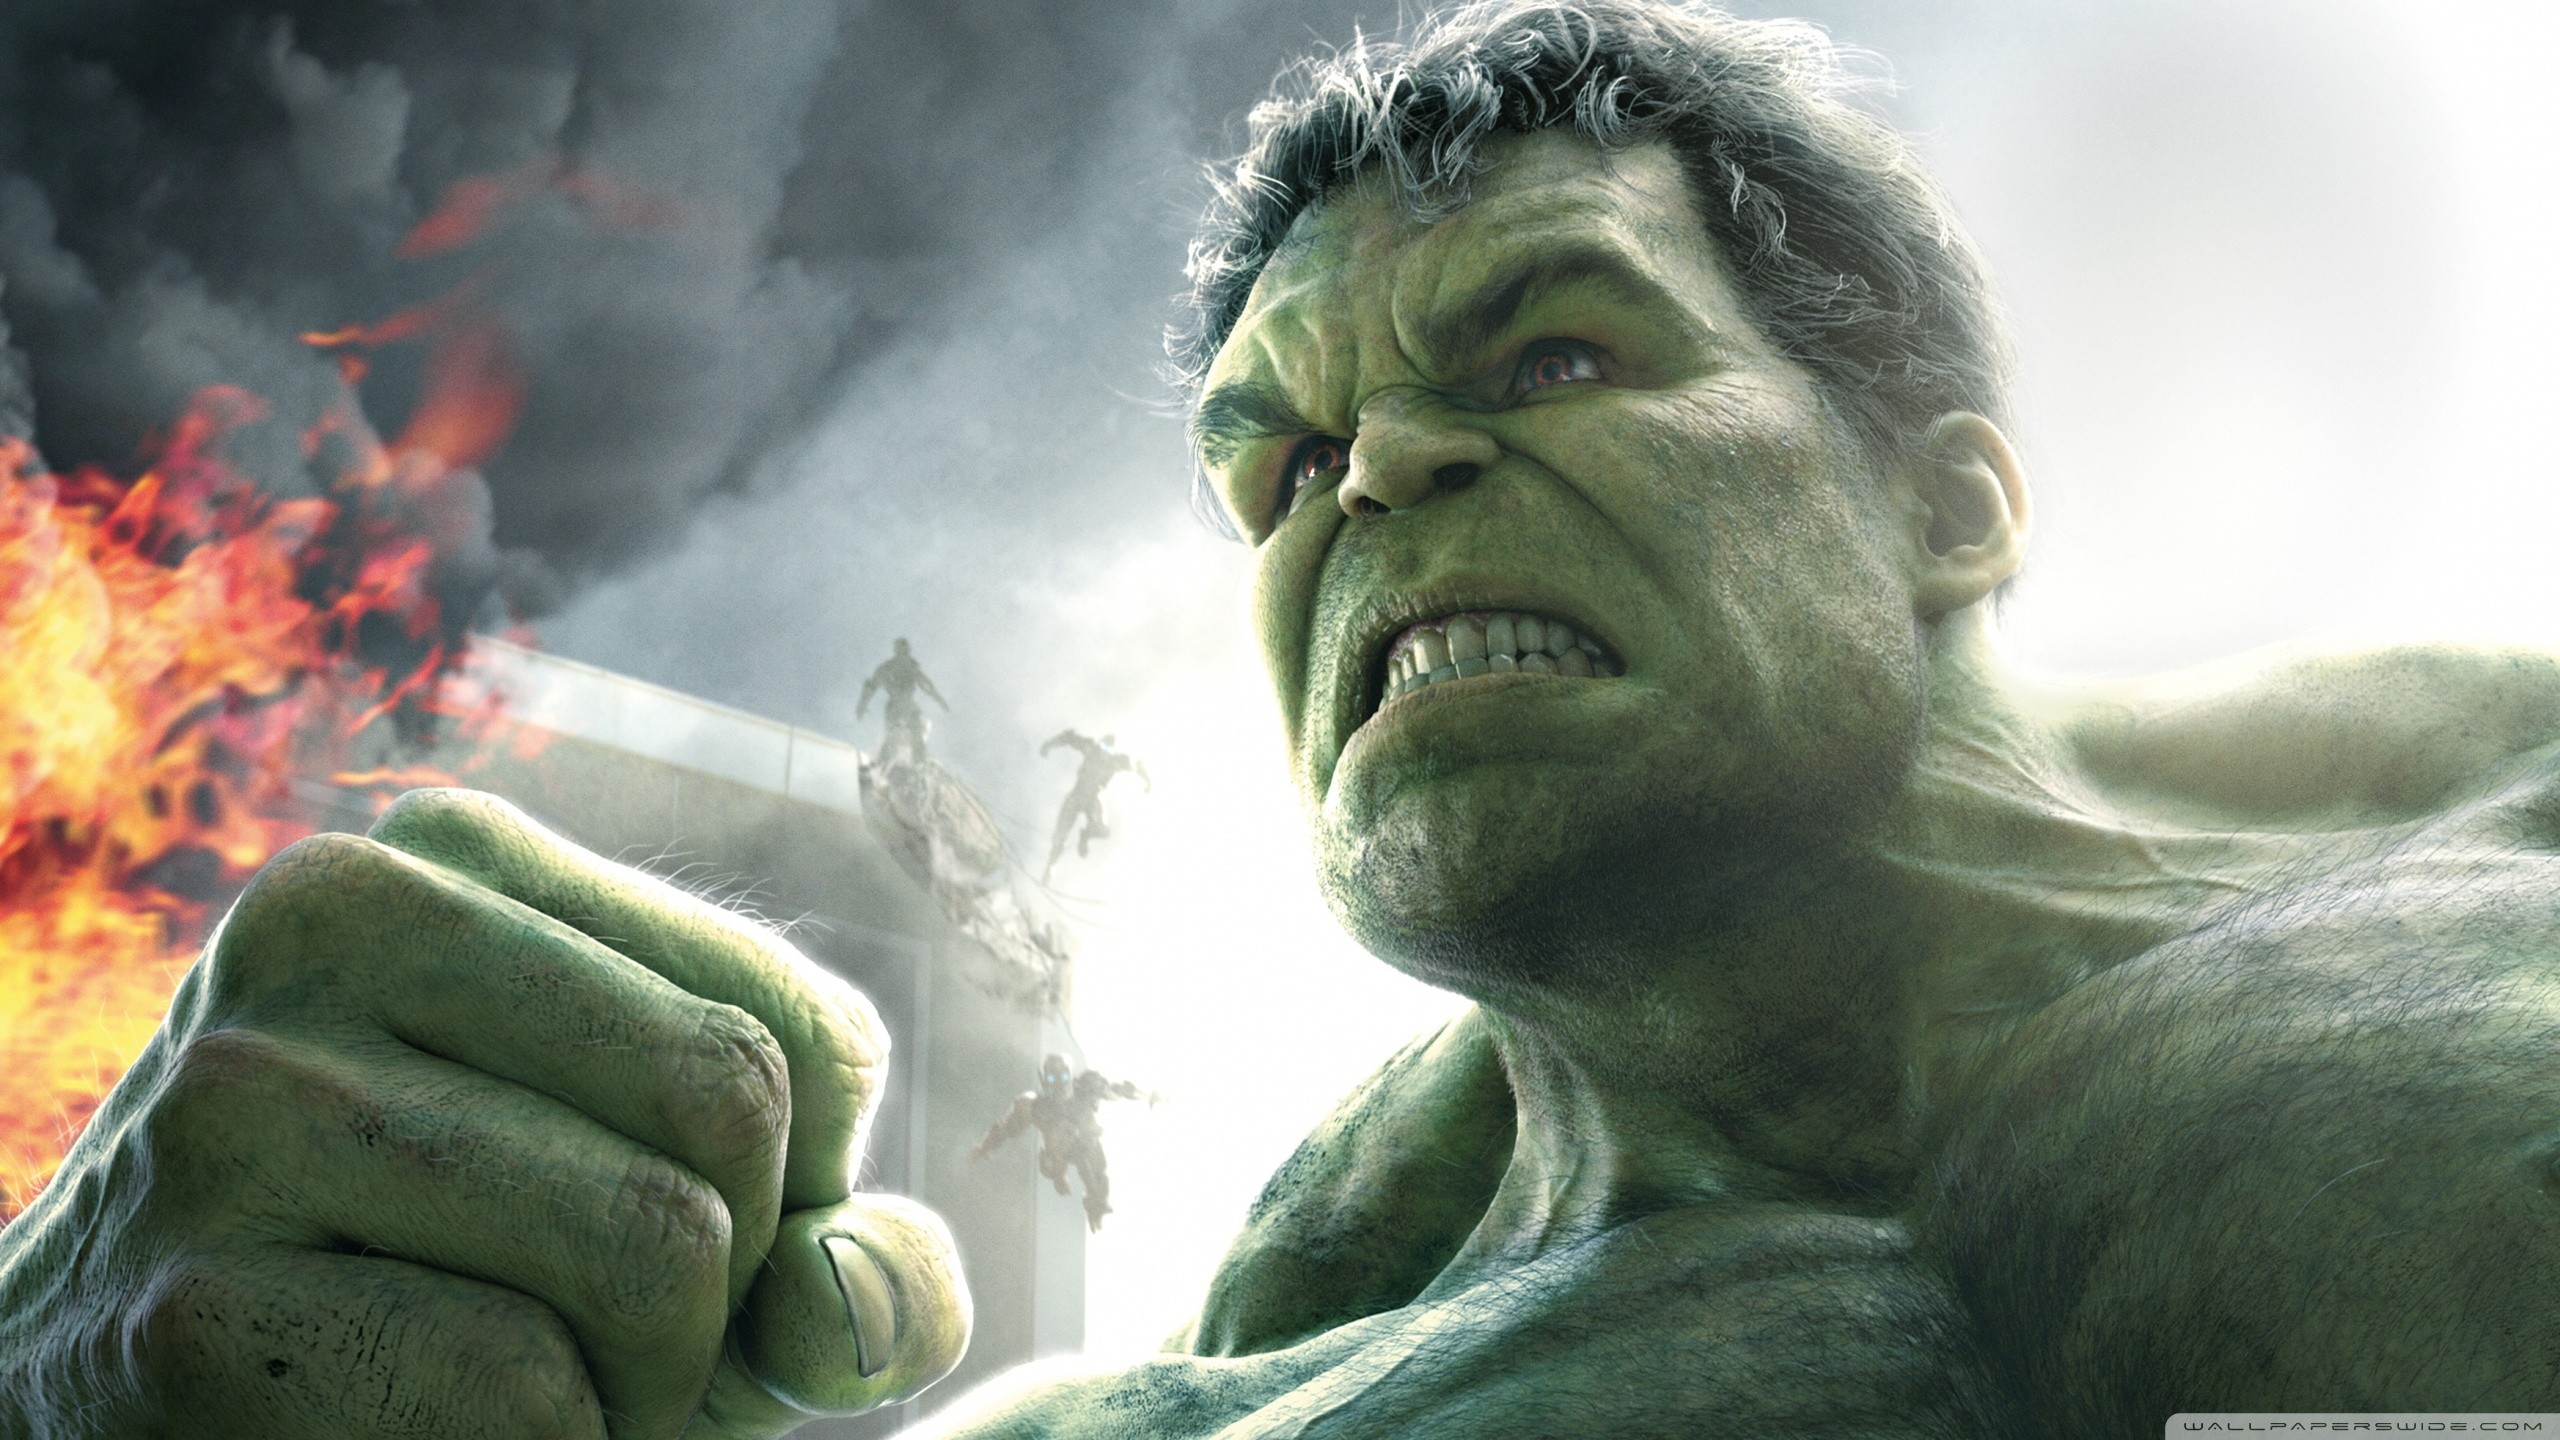 2560x1440 SimplyWallpapers.com: King Kong The Incredible Hulk (Movie .